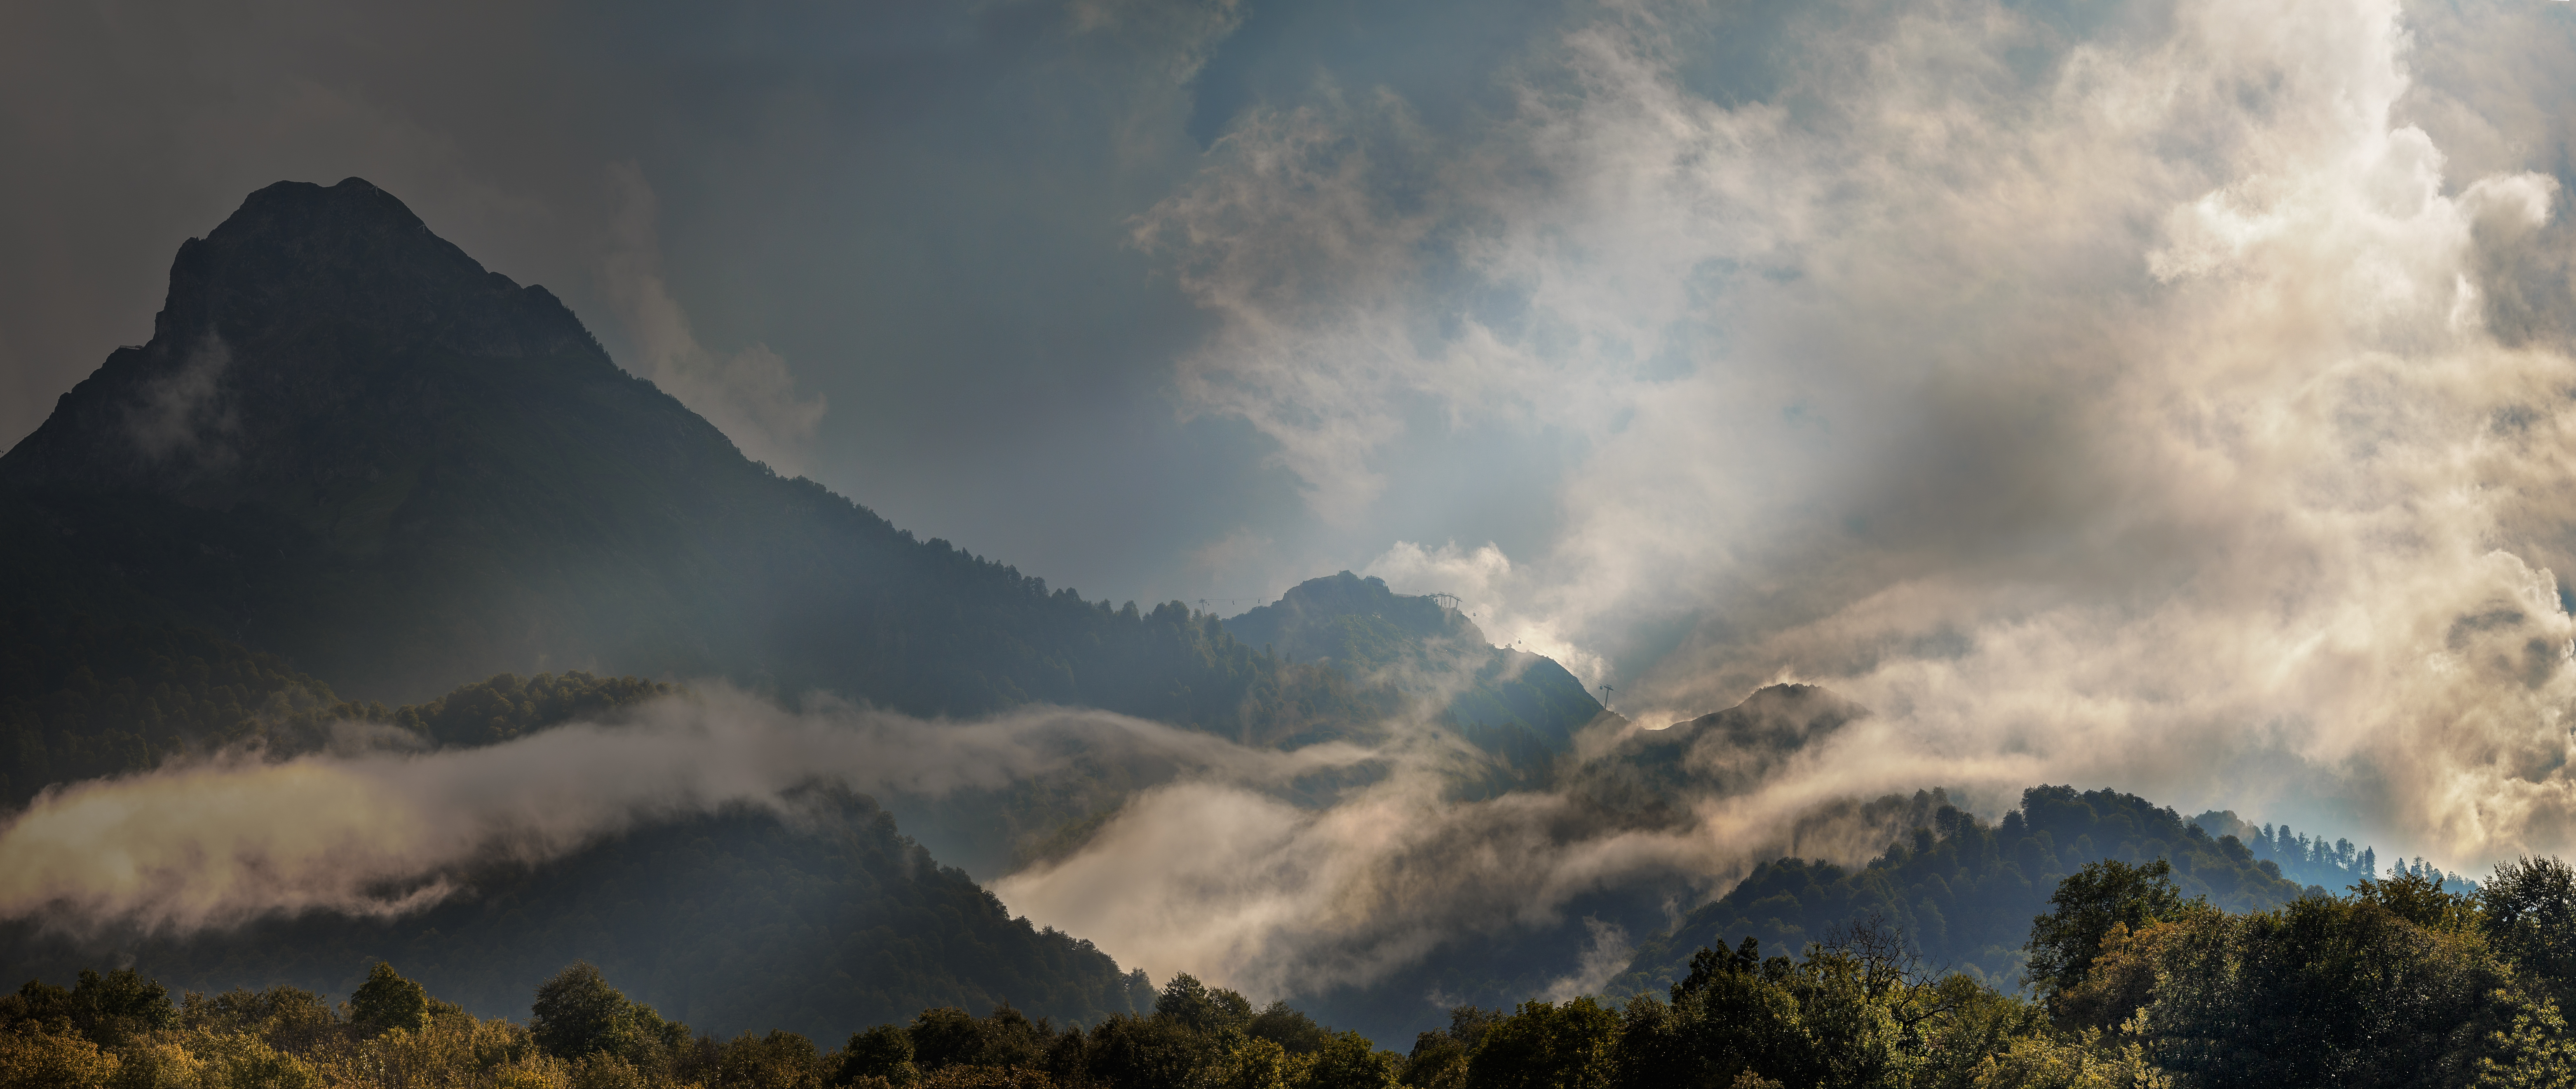 General 6250x2642 Caucasus Mountains clouds mist